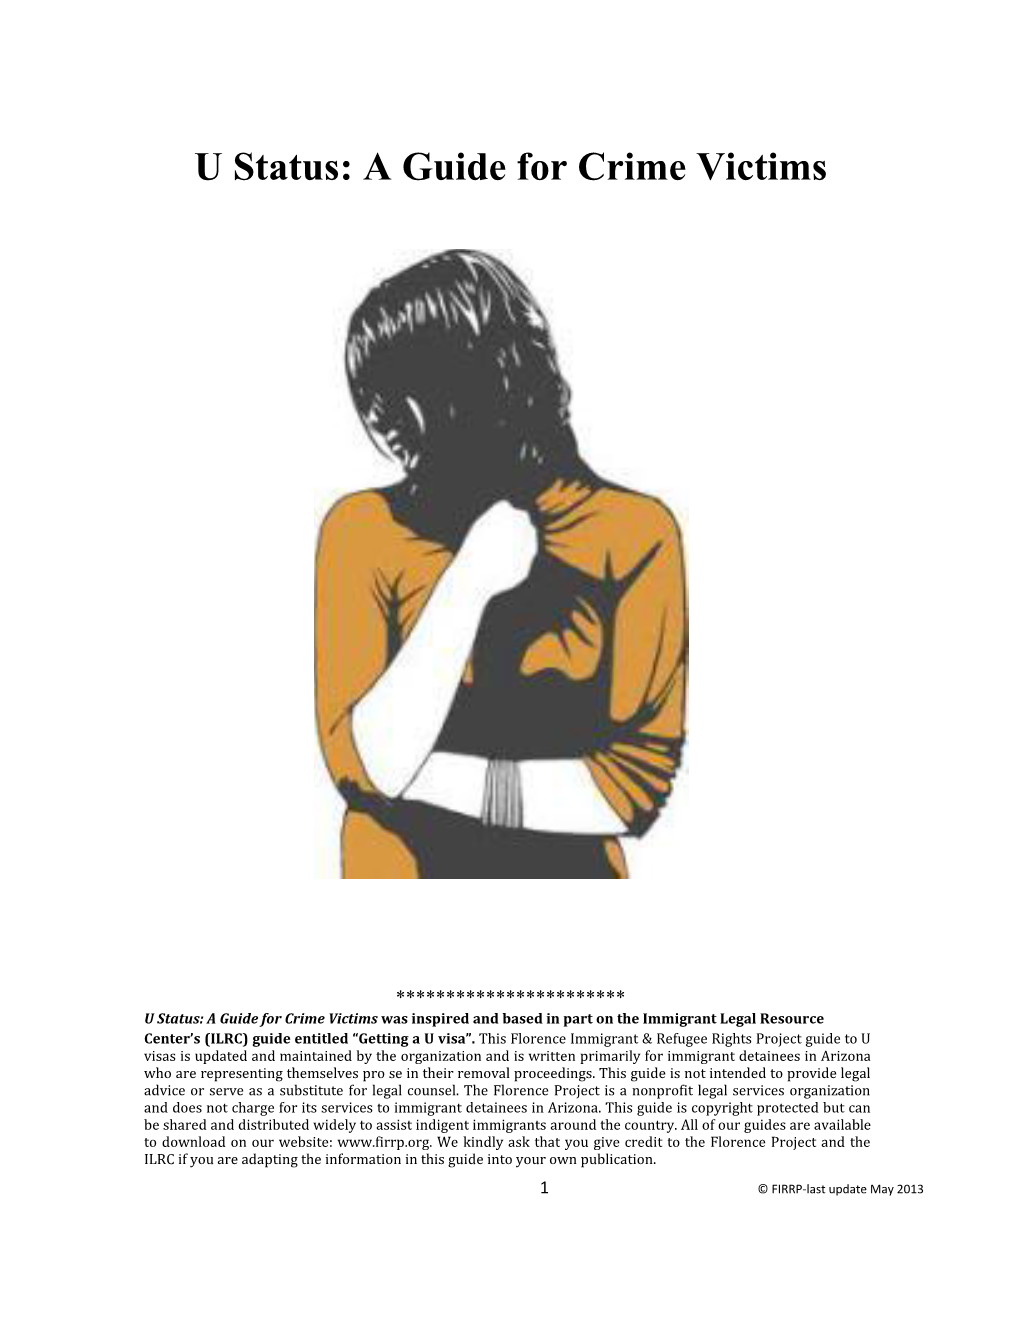 U Status: a Guide for Crime Victims